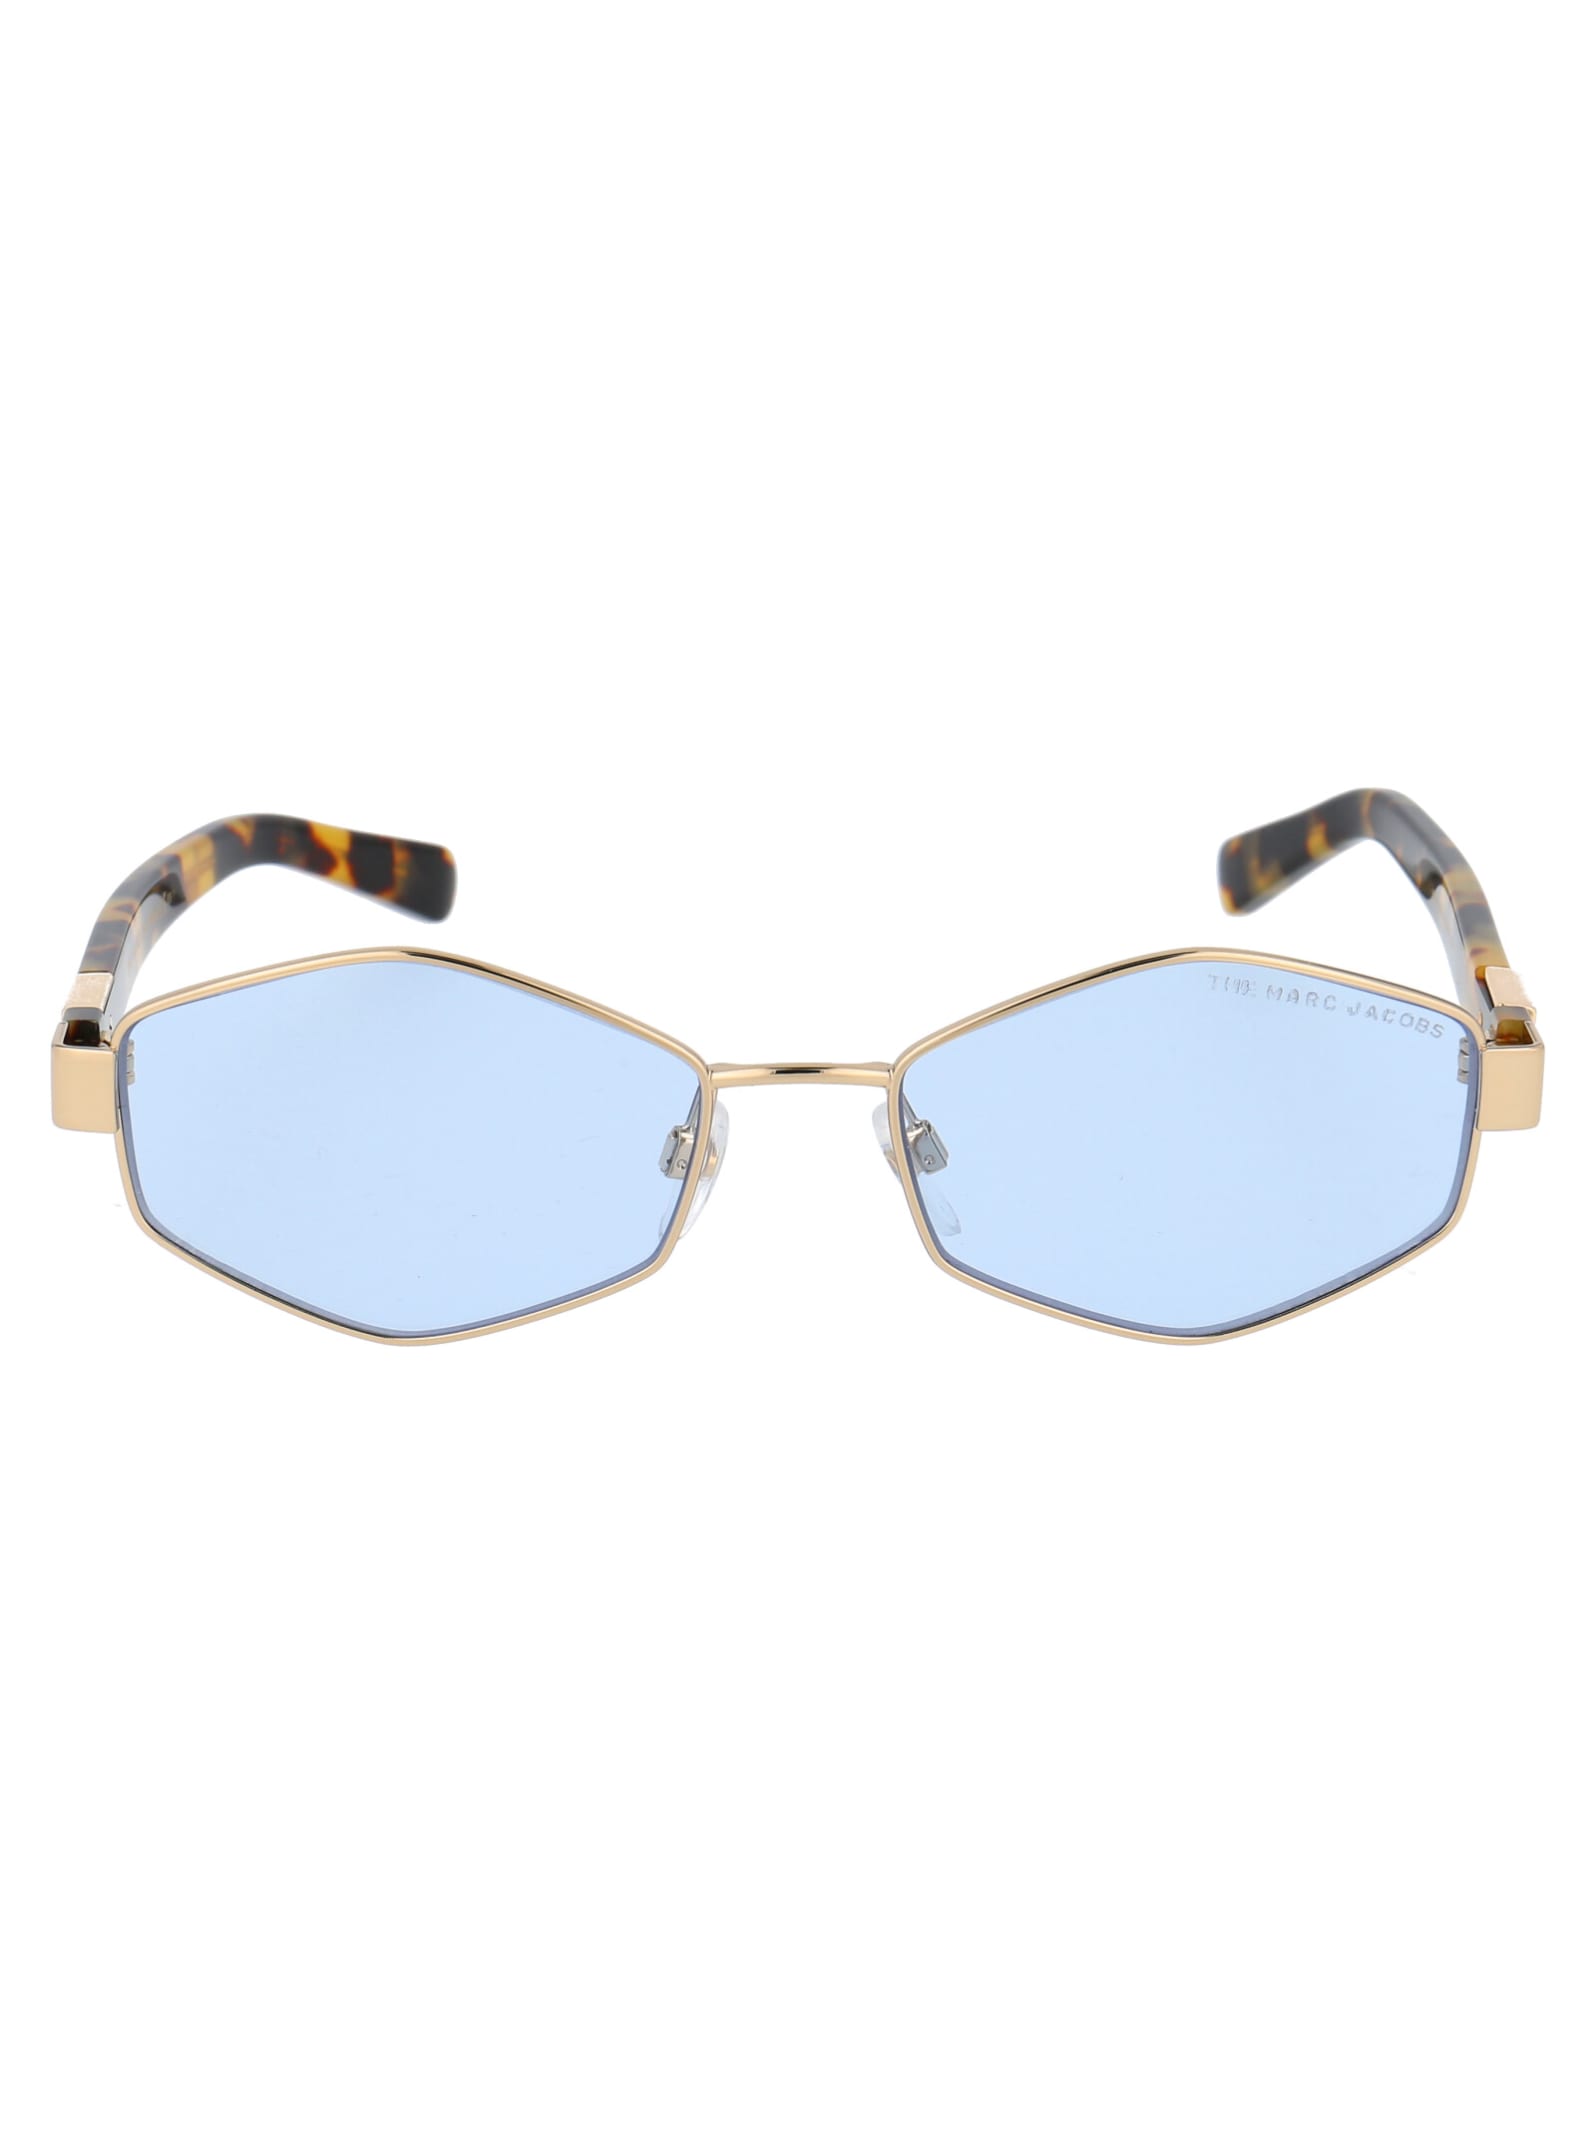 Marc Jacobs Eyewear Marc 496/s Sunglasses